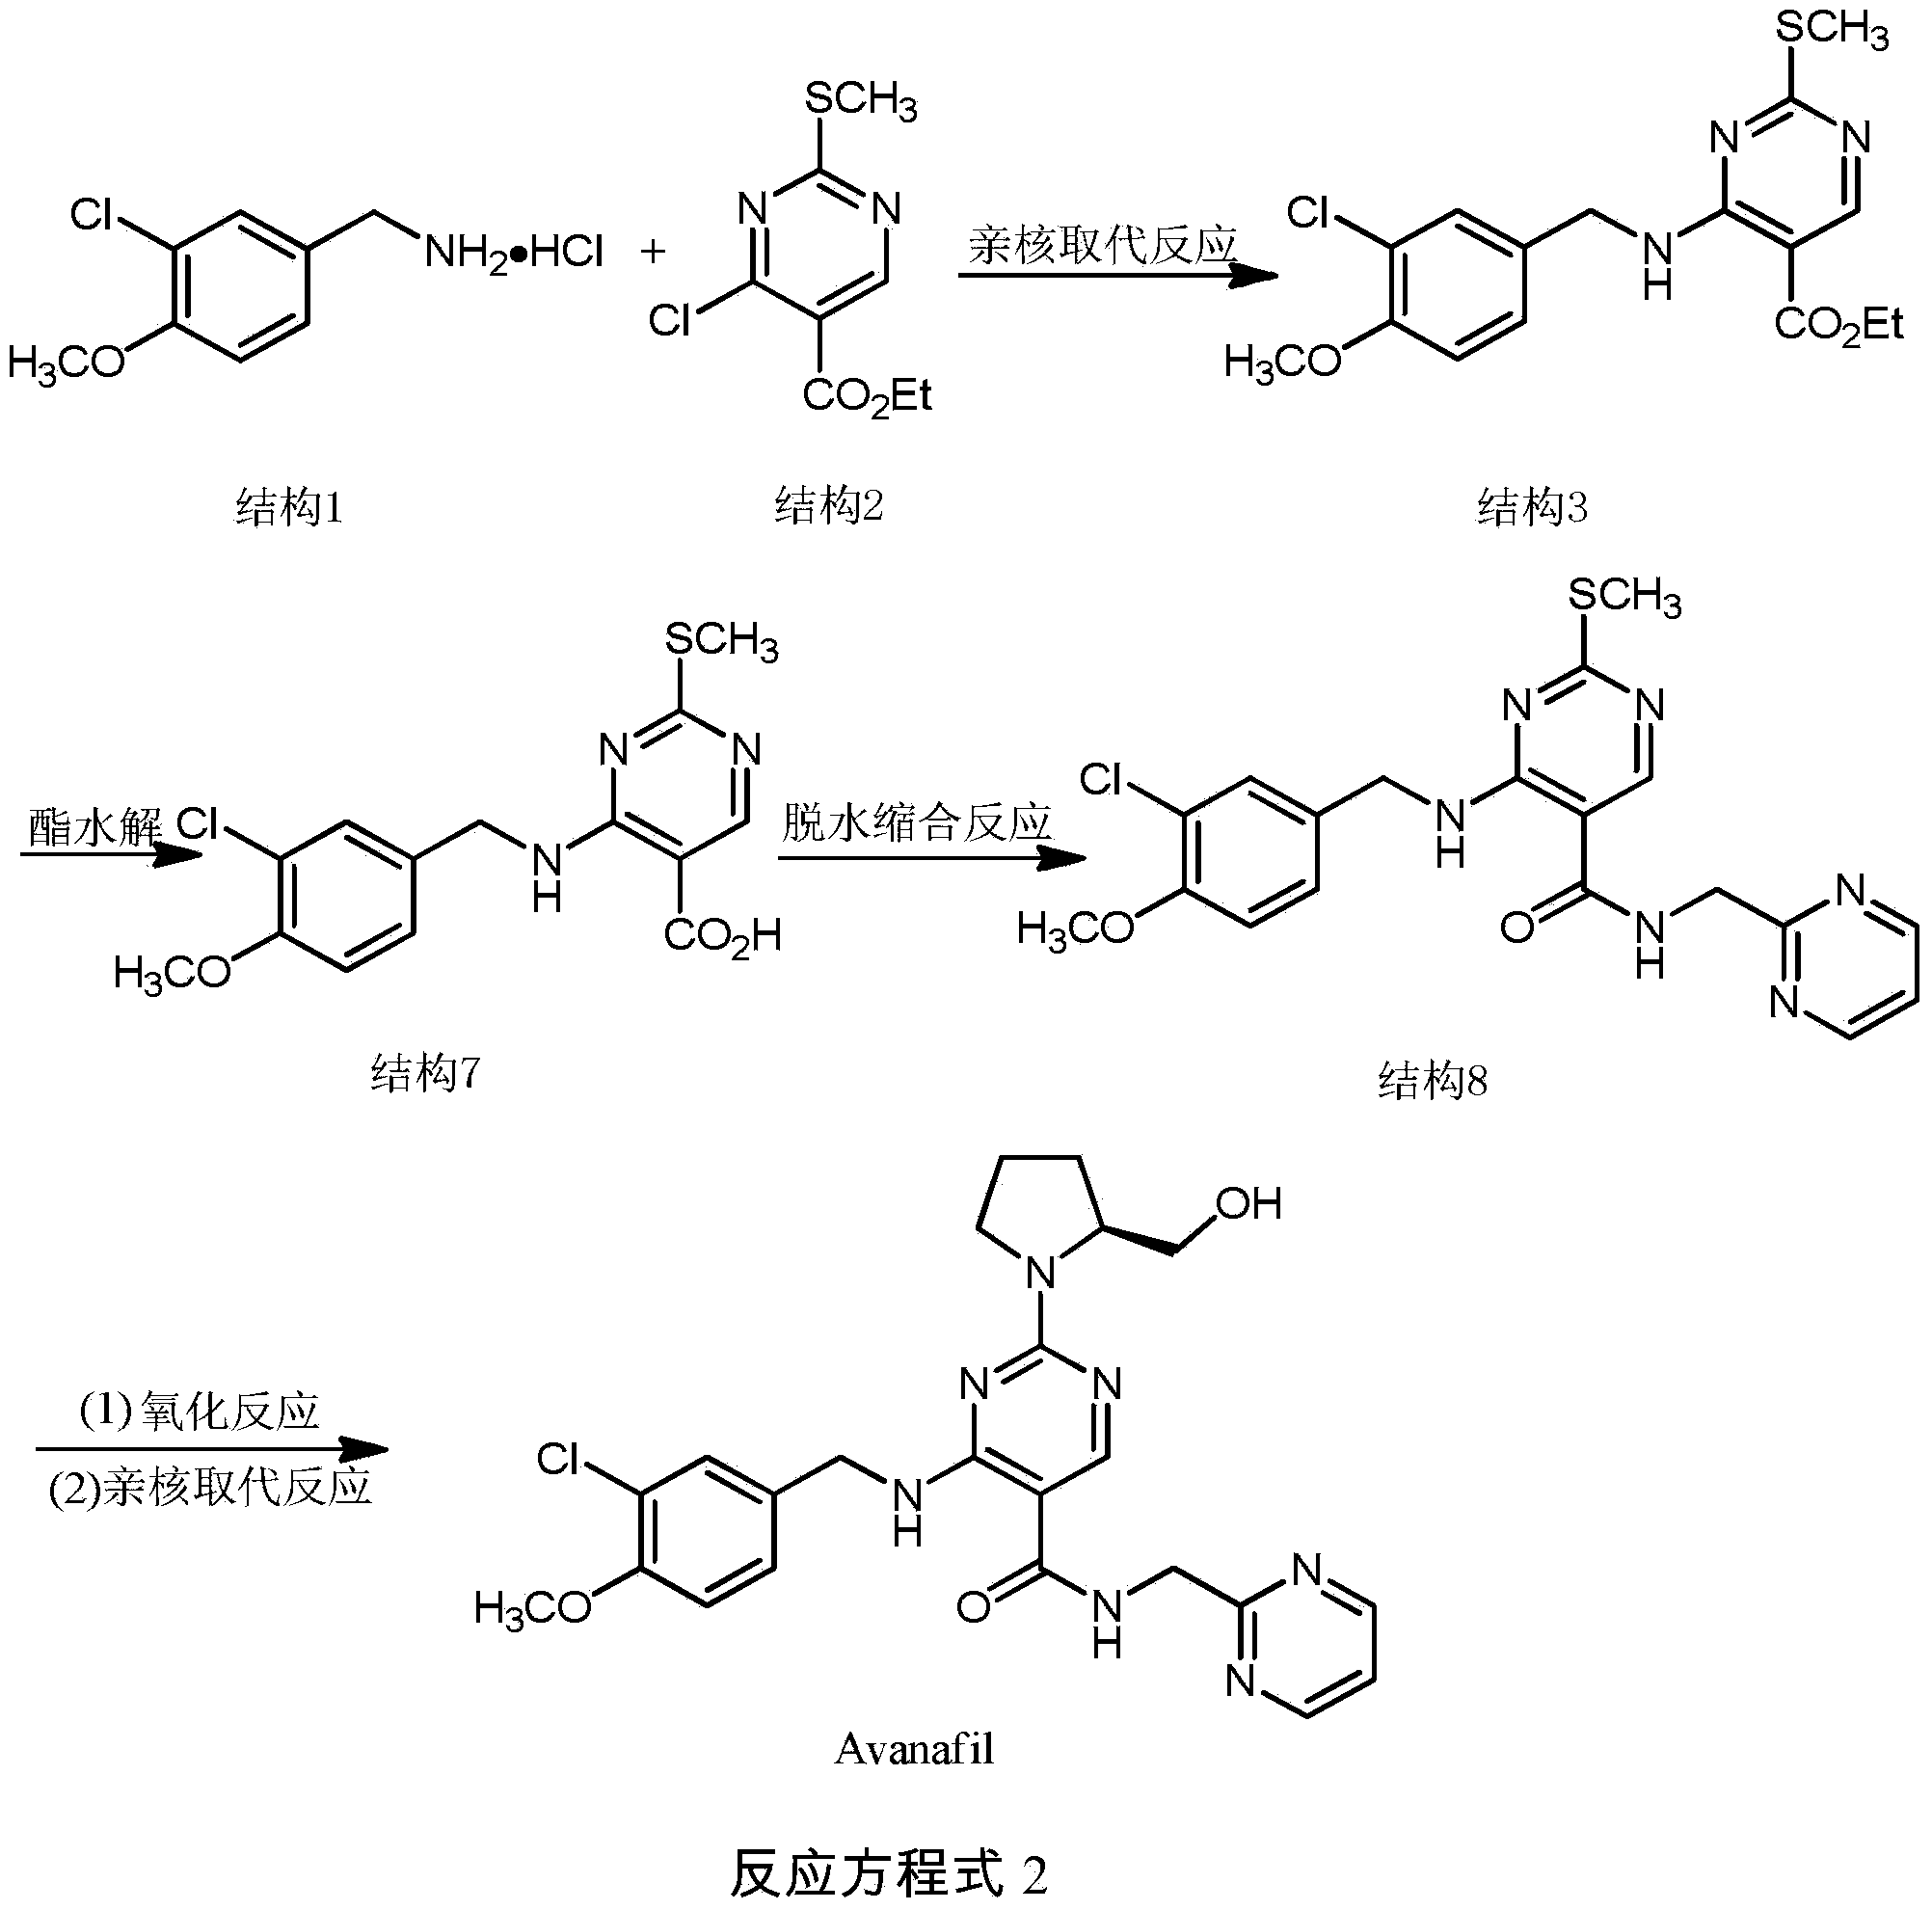 Synthesis method of avanafil